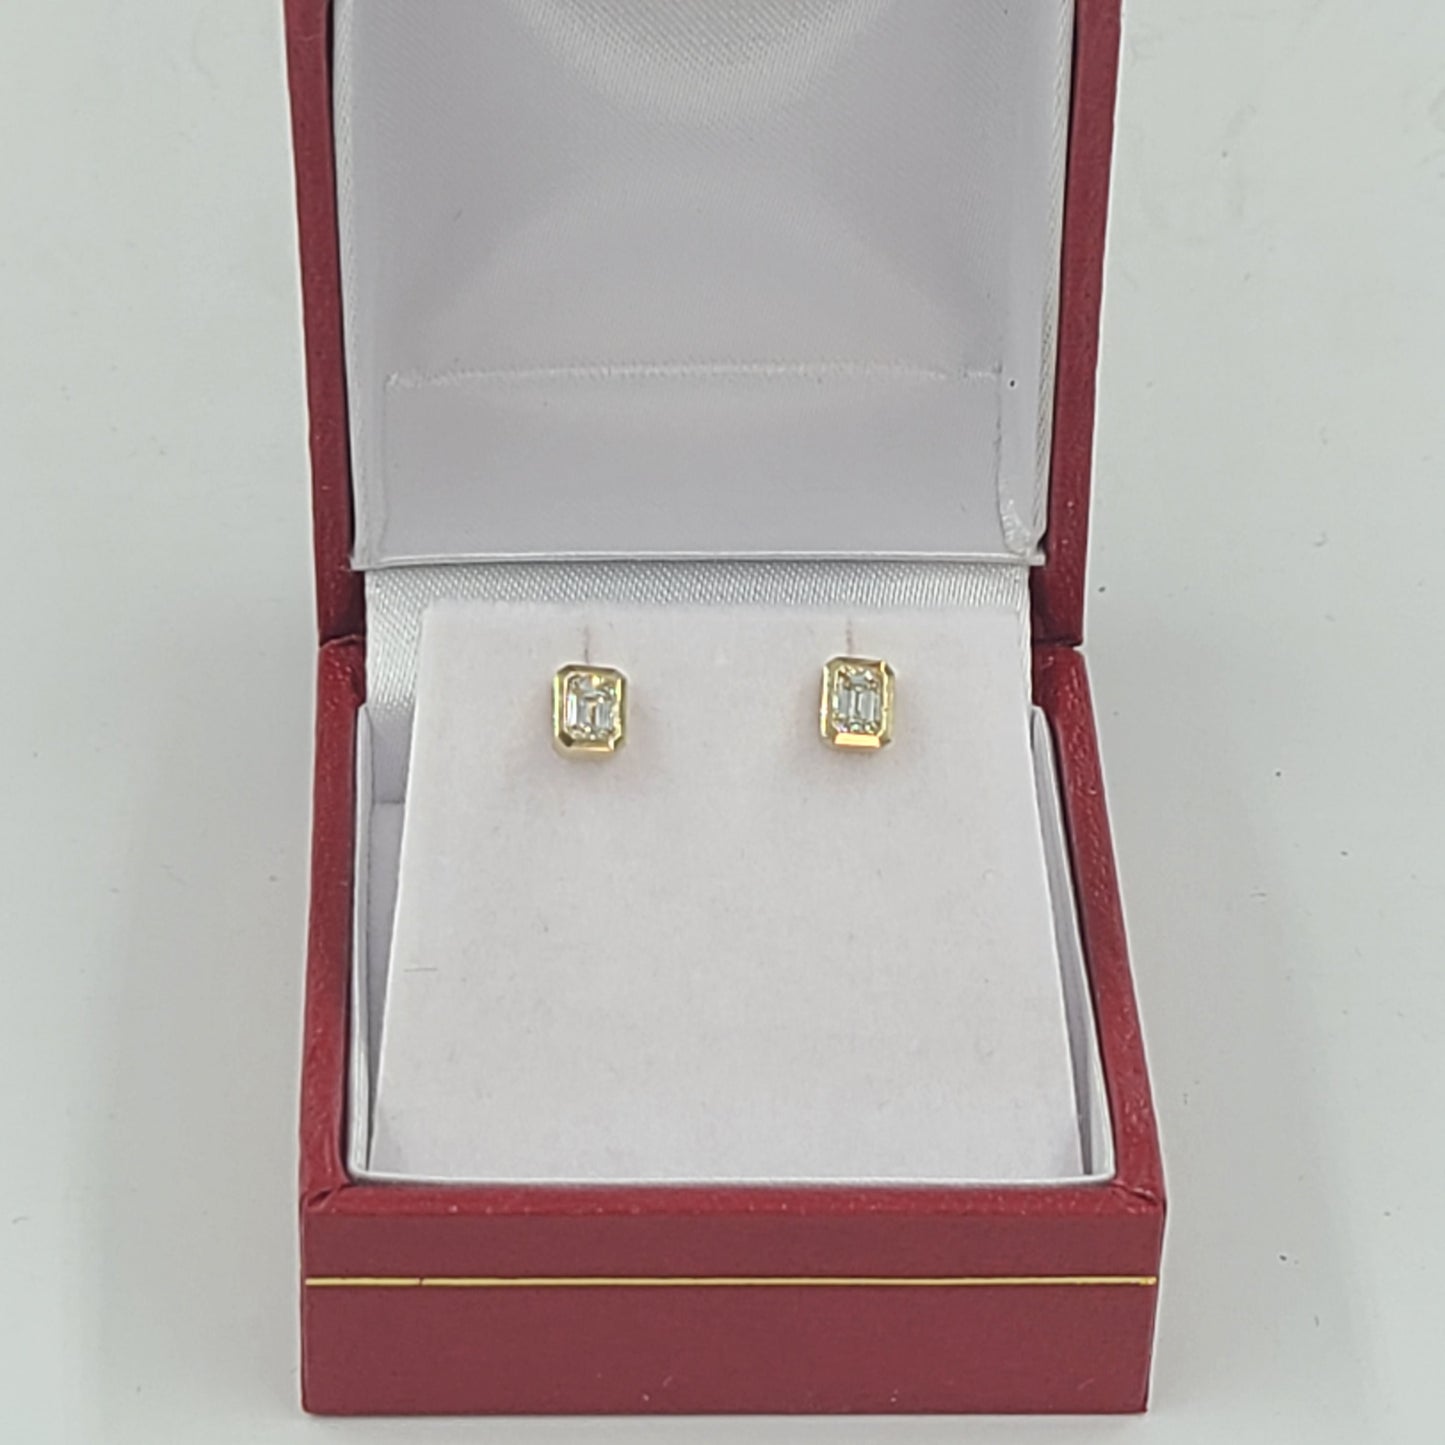 Emerald Cut Diamond 0.22ct Solitaire Bezel Set Earrings/Anniversary gift/100% Natural Diamond Earrings/Gift for her Stud Earrings